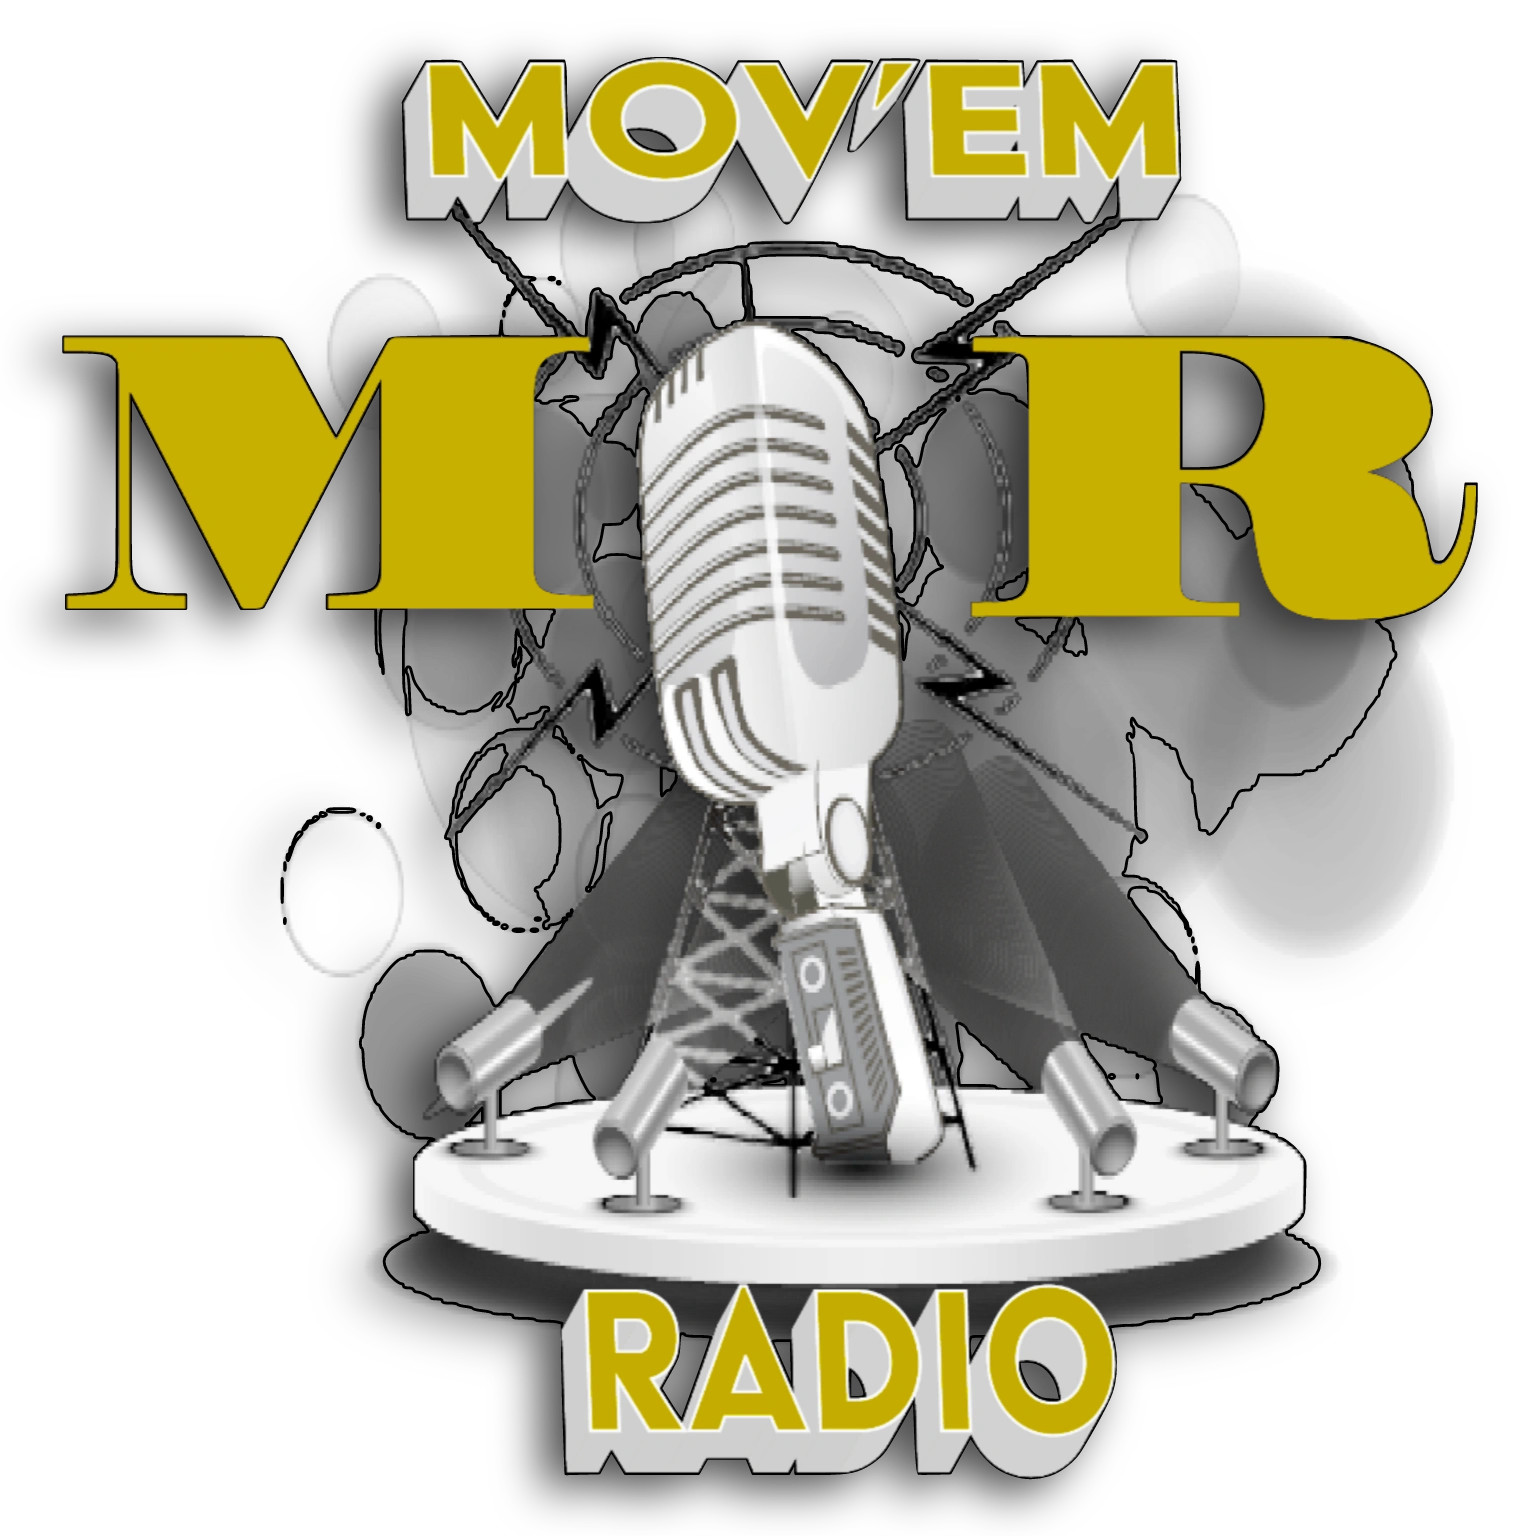 Mov'em Radio - Independent Artist Interviews and Broadcasting, Talk Radio,  Radio Live, Radio Station